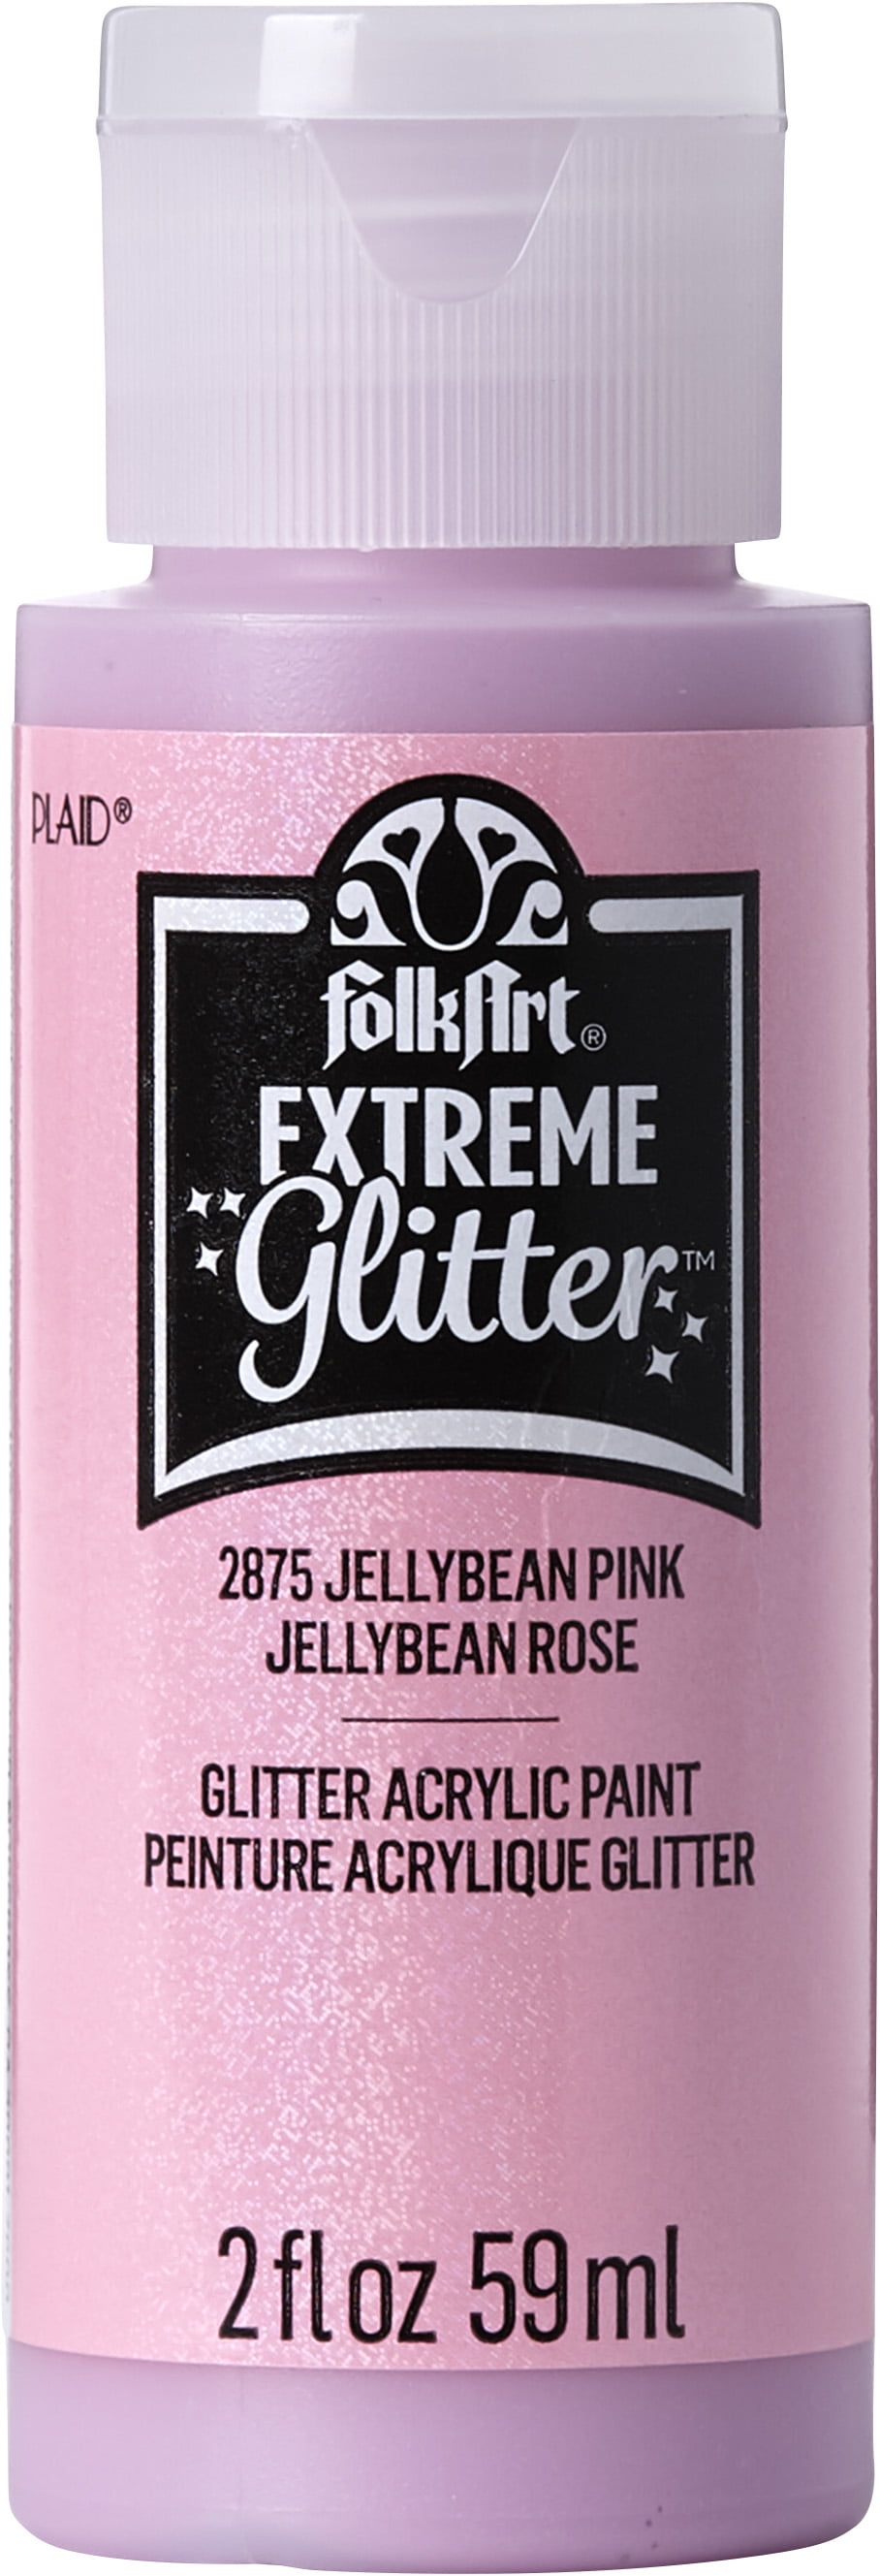 FolkArt Extreme Glitter Acrylic Craft Paint, Glitter Finish, Jellybean Pink, 2 fl oz